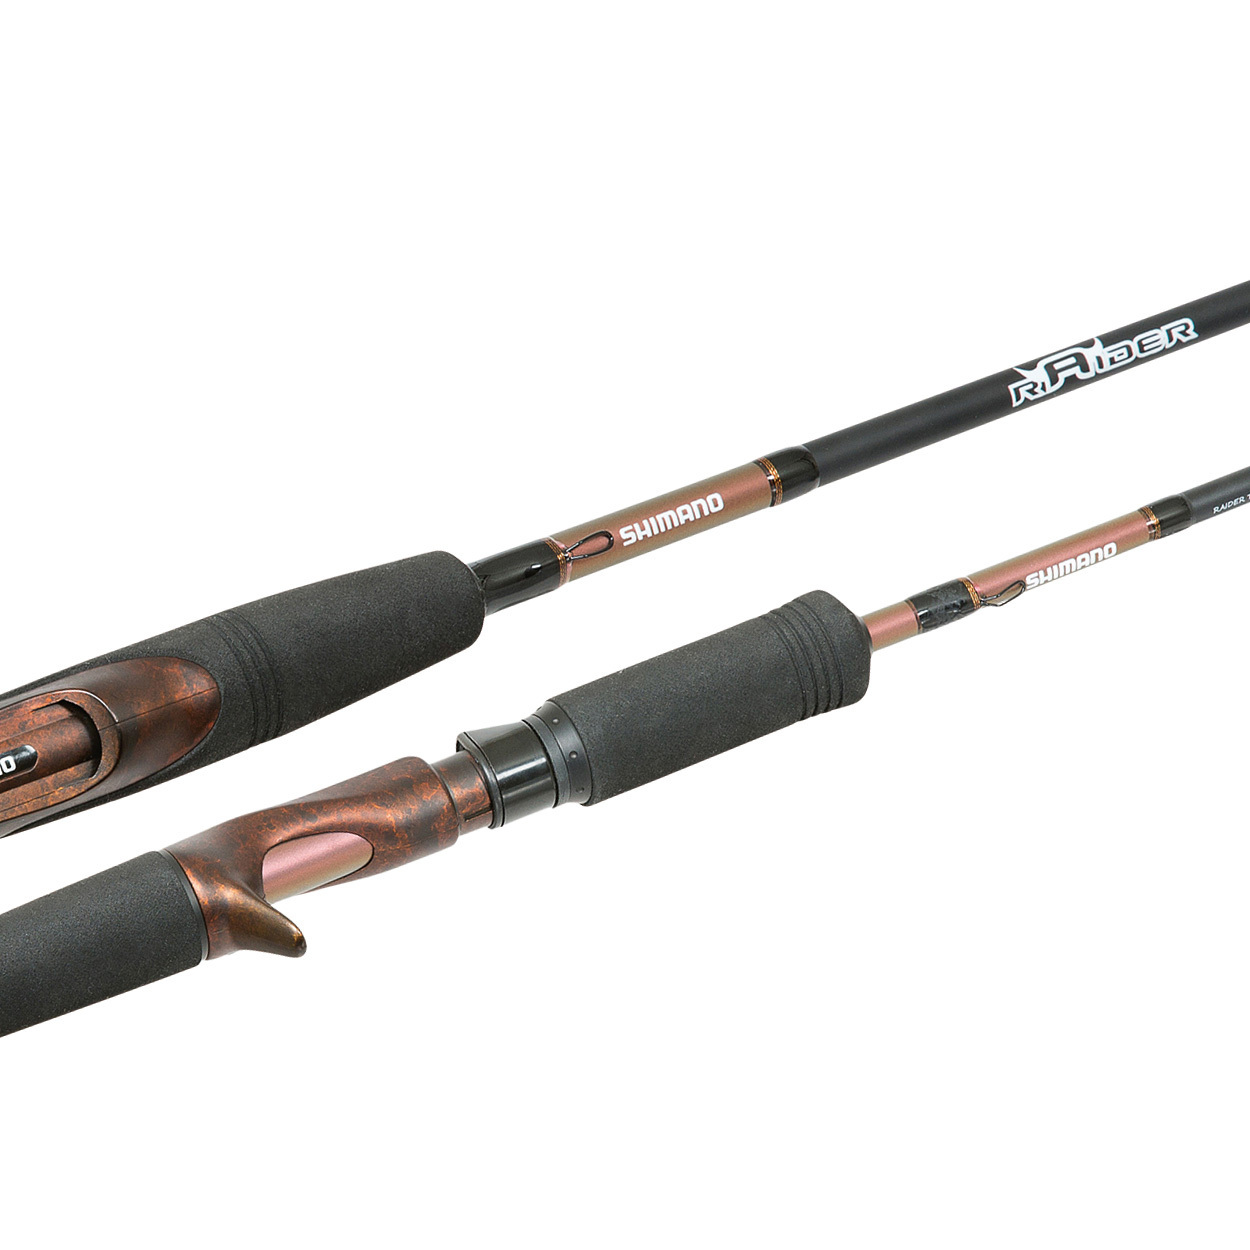 Disconitnued - Shimano Raider Series Travel Fishing Rod - Choose Model BRAND  NEW